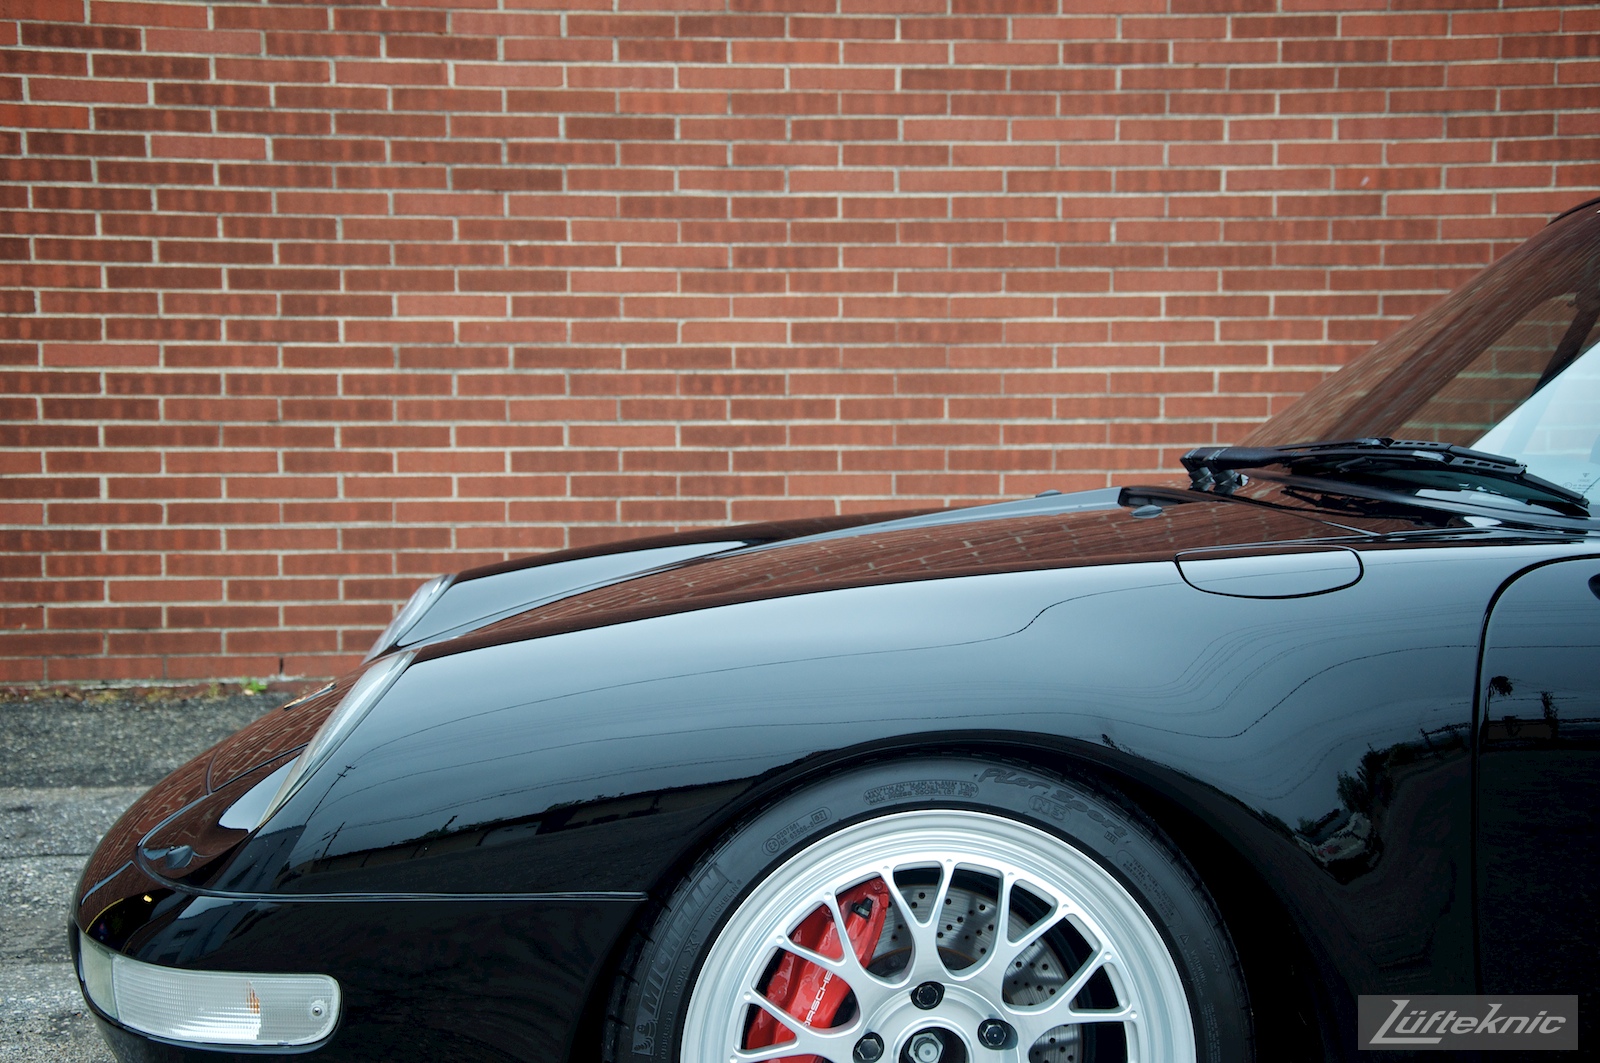 A black 993 Porsche Turbo GT2 conversion sits in the Lufteknic parking lot.